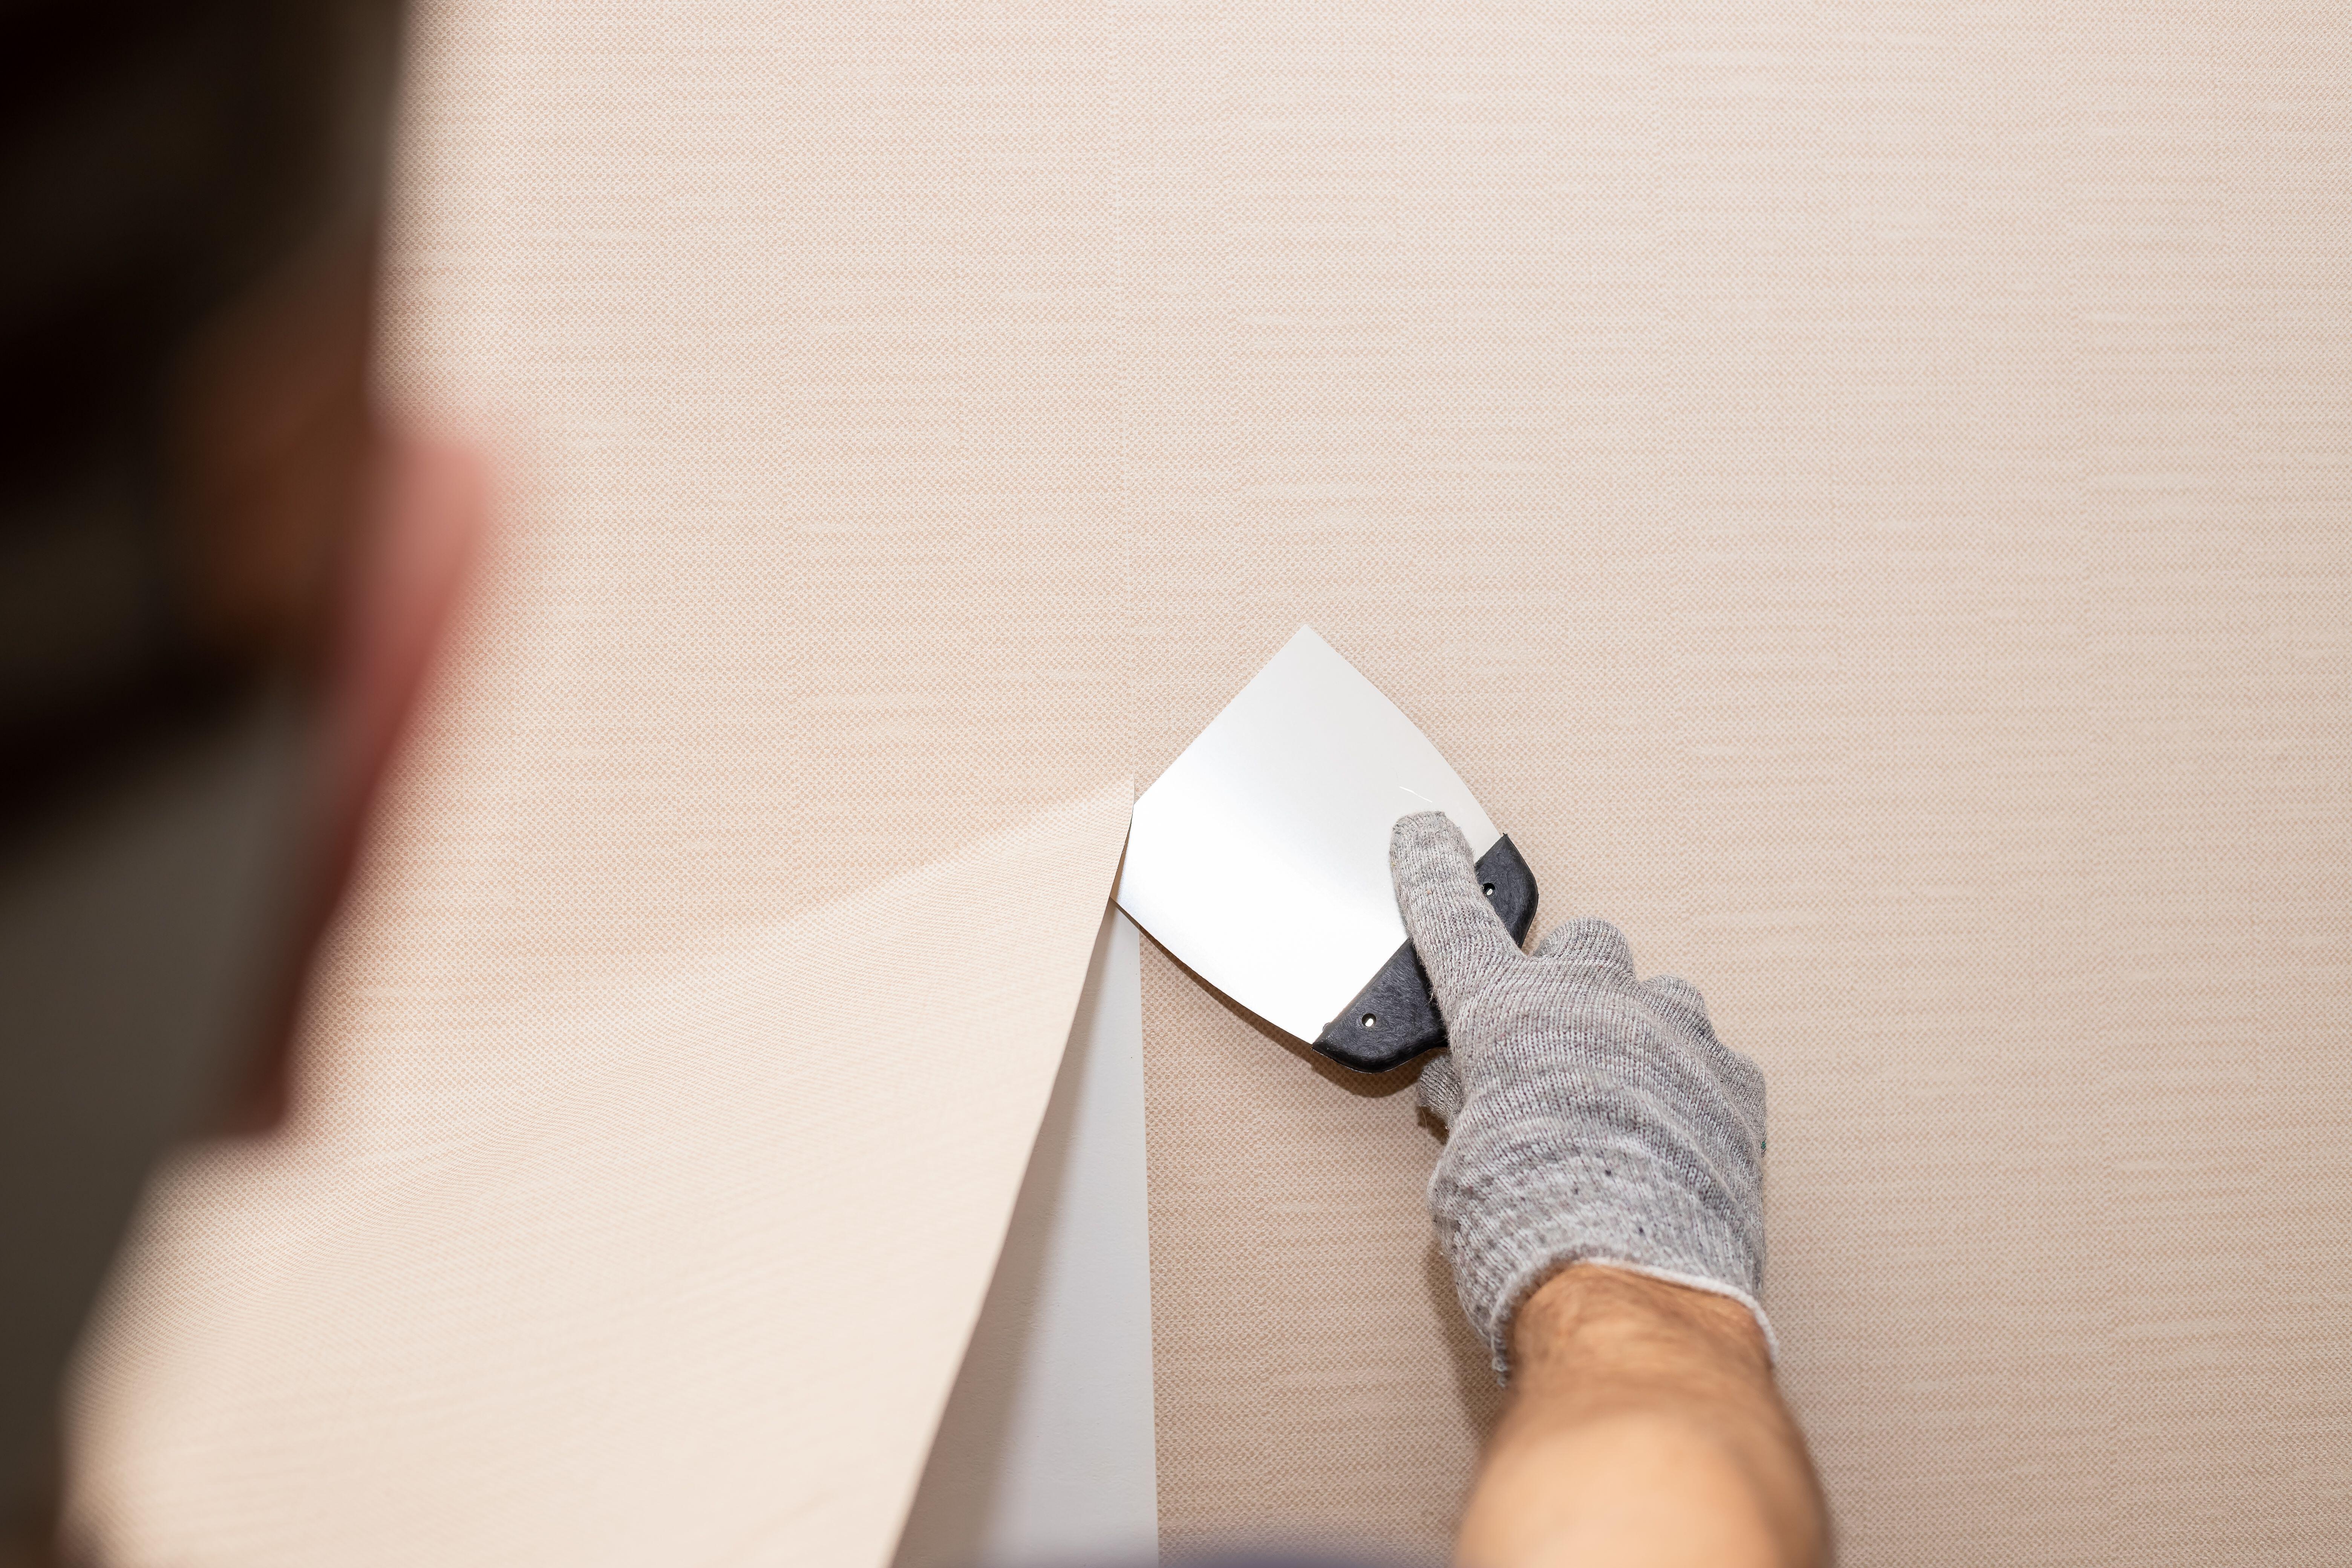 easy wallpaper stripping tips